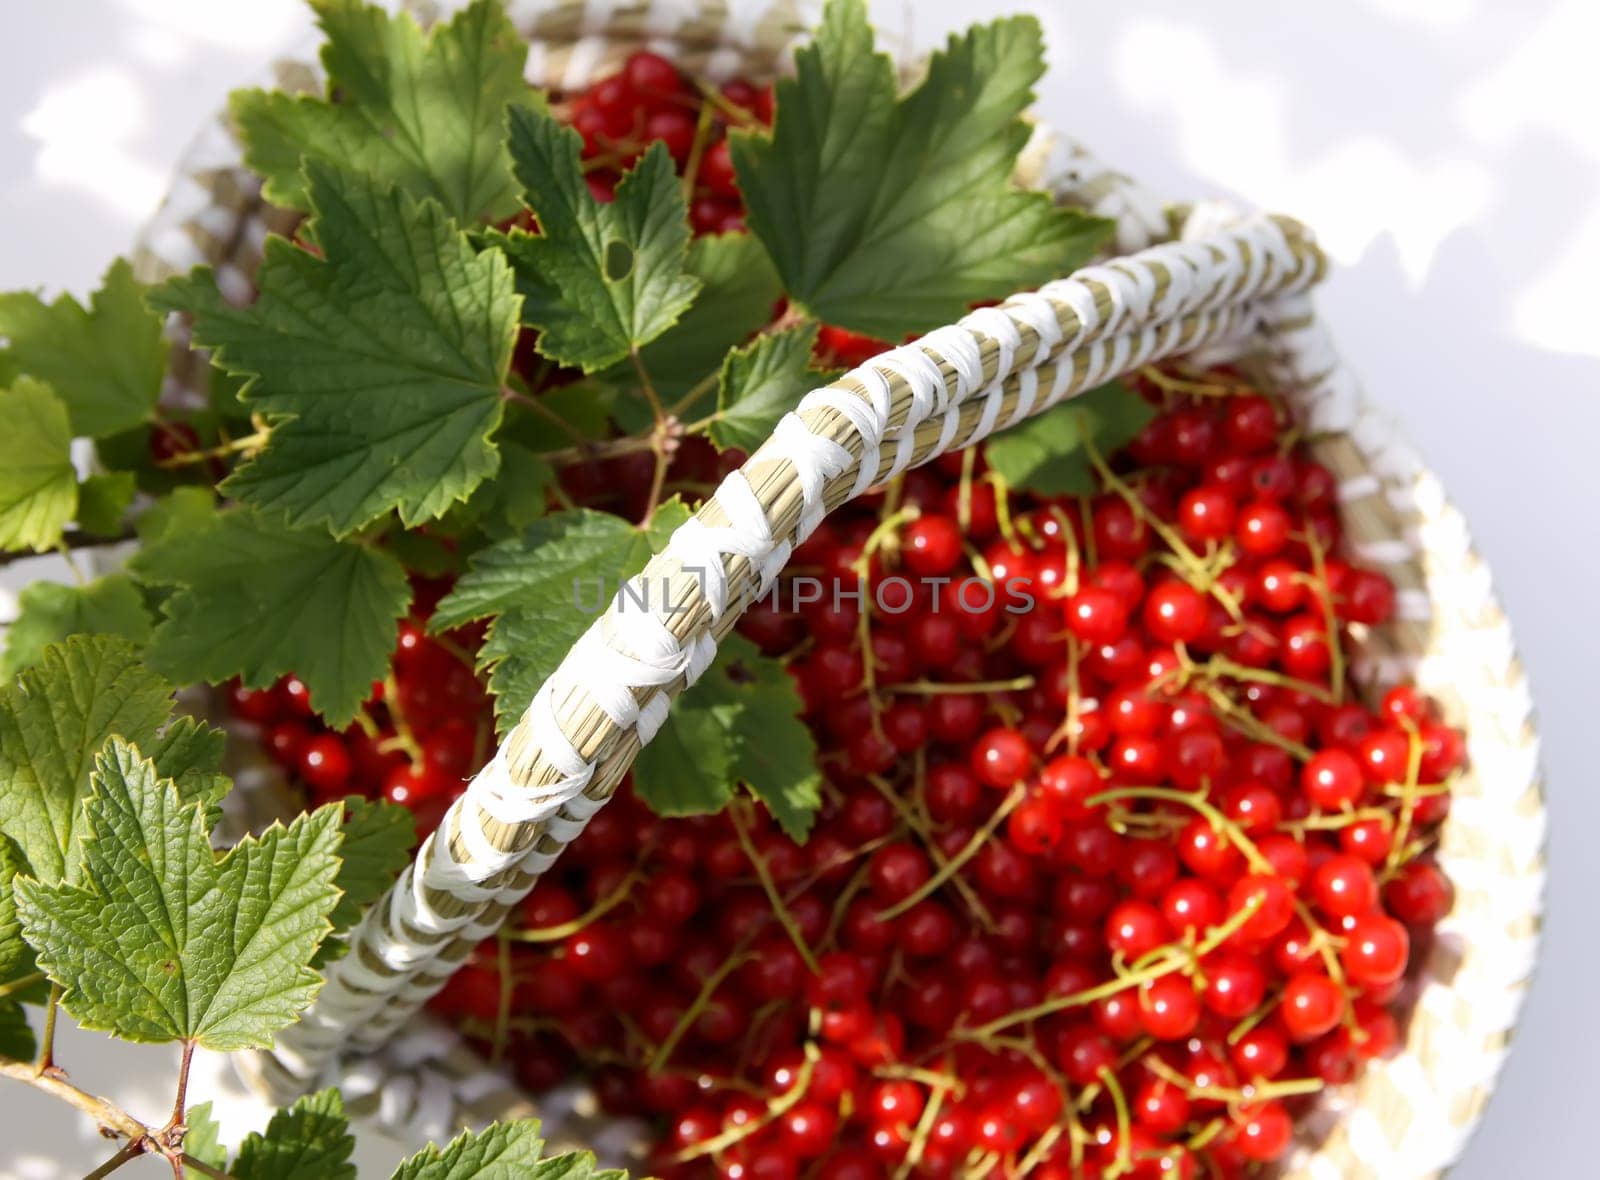 Basket with red currants in the basket. Fresh ripe red berries. Healthy food ingredients.